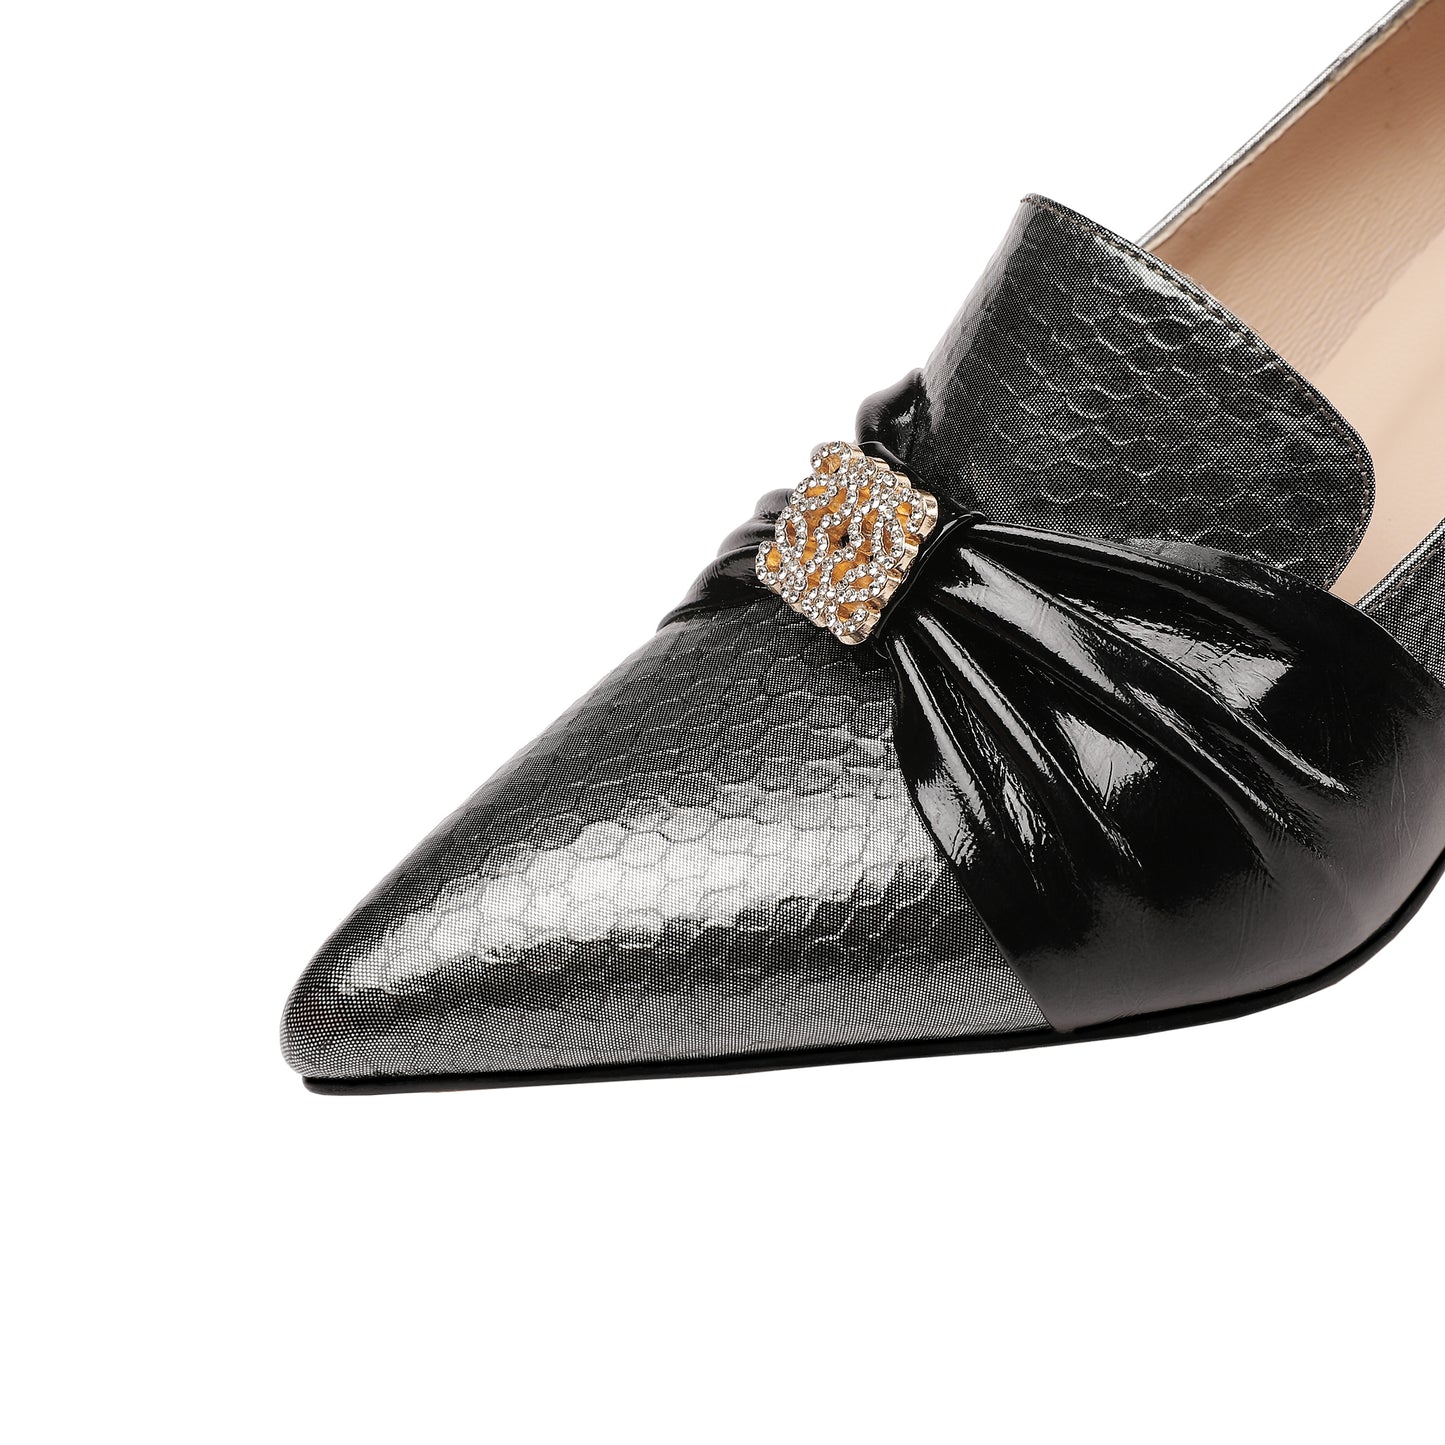 TinaCus Women's Genuine Leather Handmade Pointy Toe Elegant Spool Heel Rhinestone Pattern Pumps Shoes